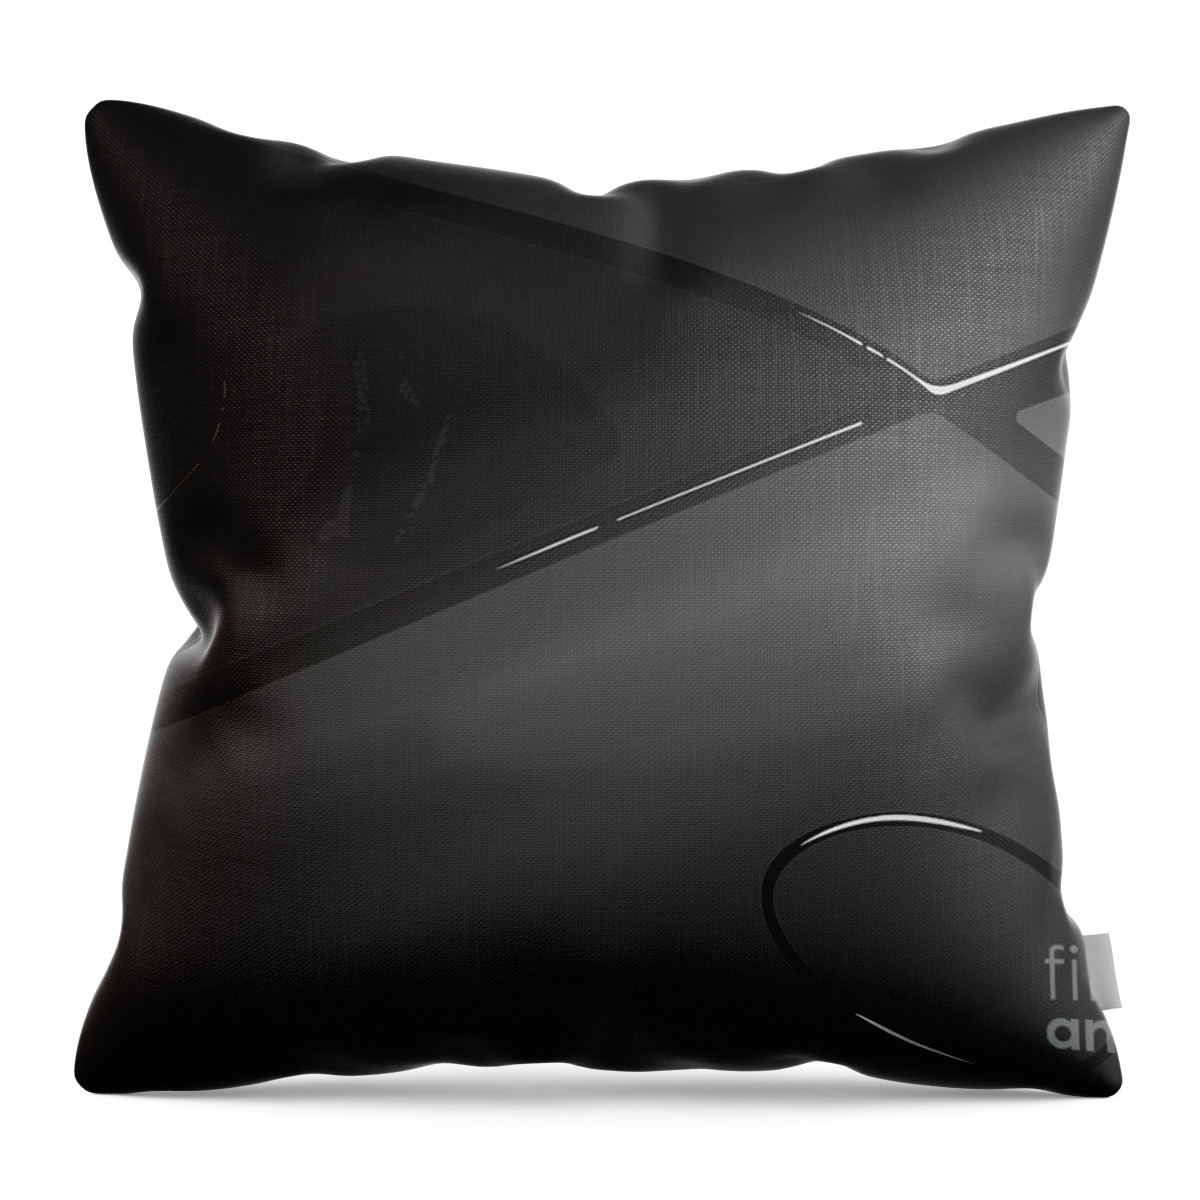 Sports Car Throw Pillow featuring the digital art Evora X Design Great British Sports Cars - Grey Metallic by Moospeed Art